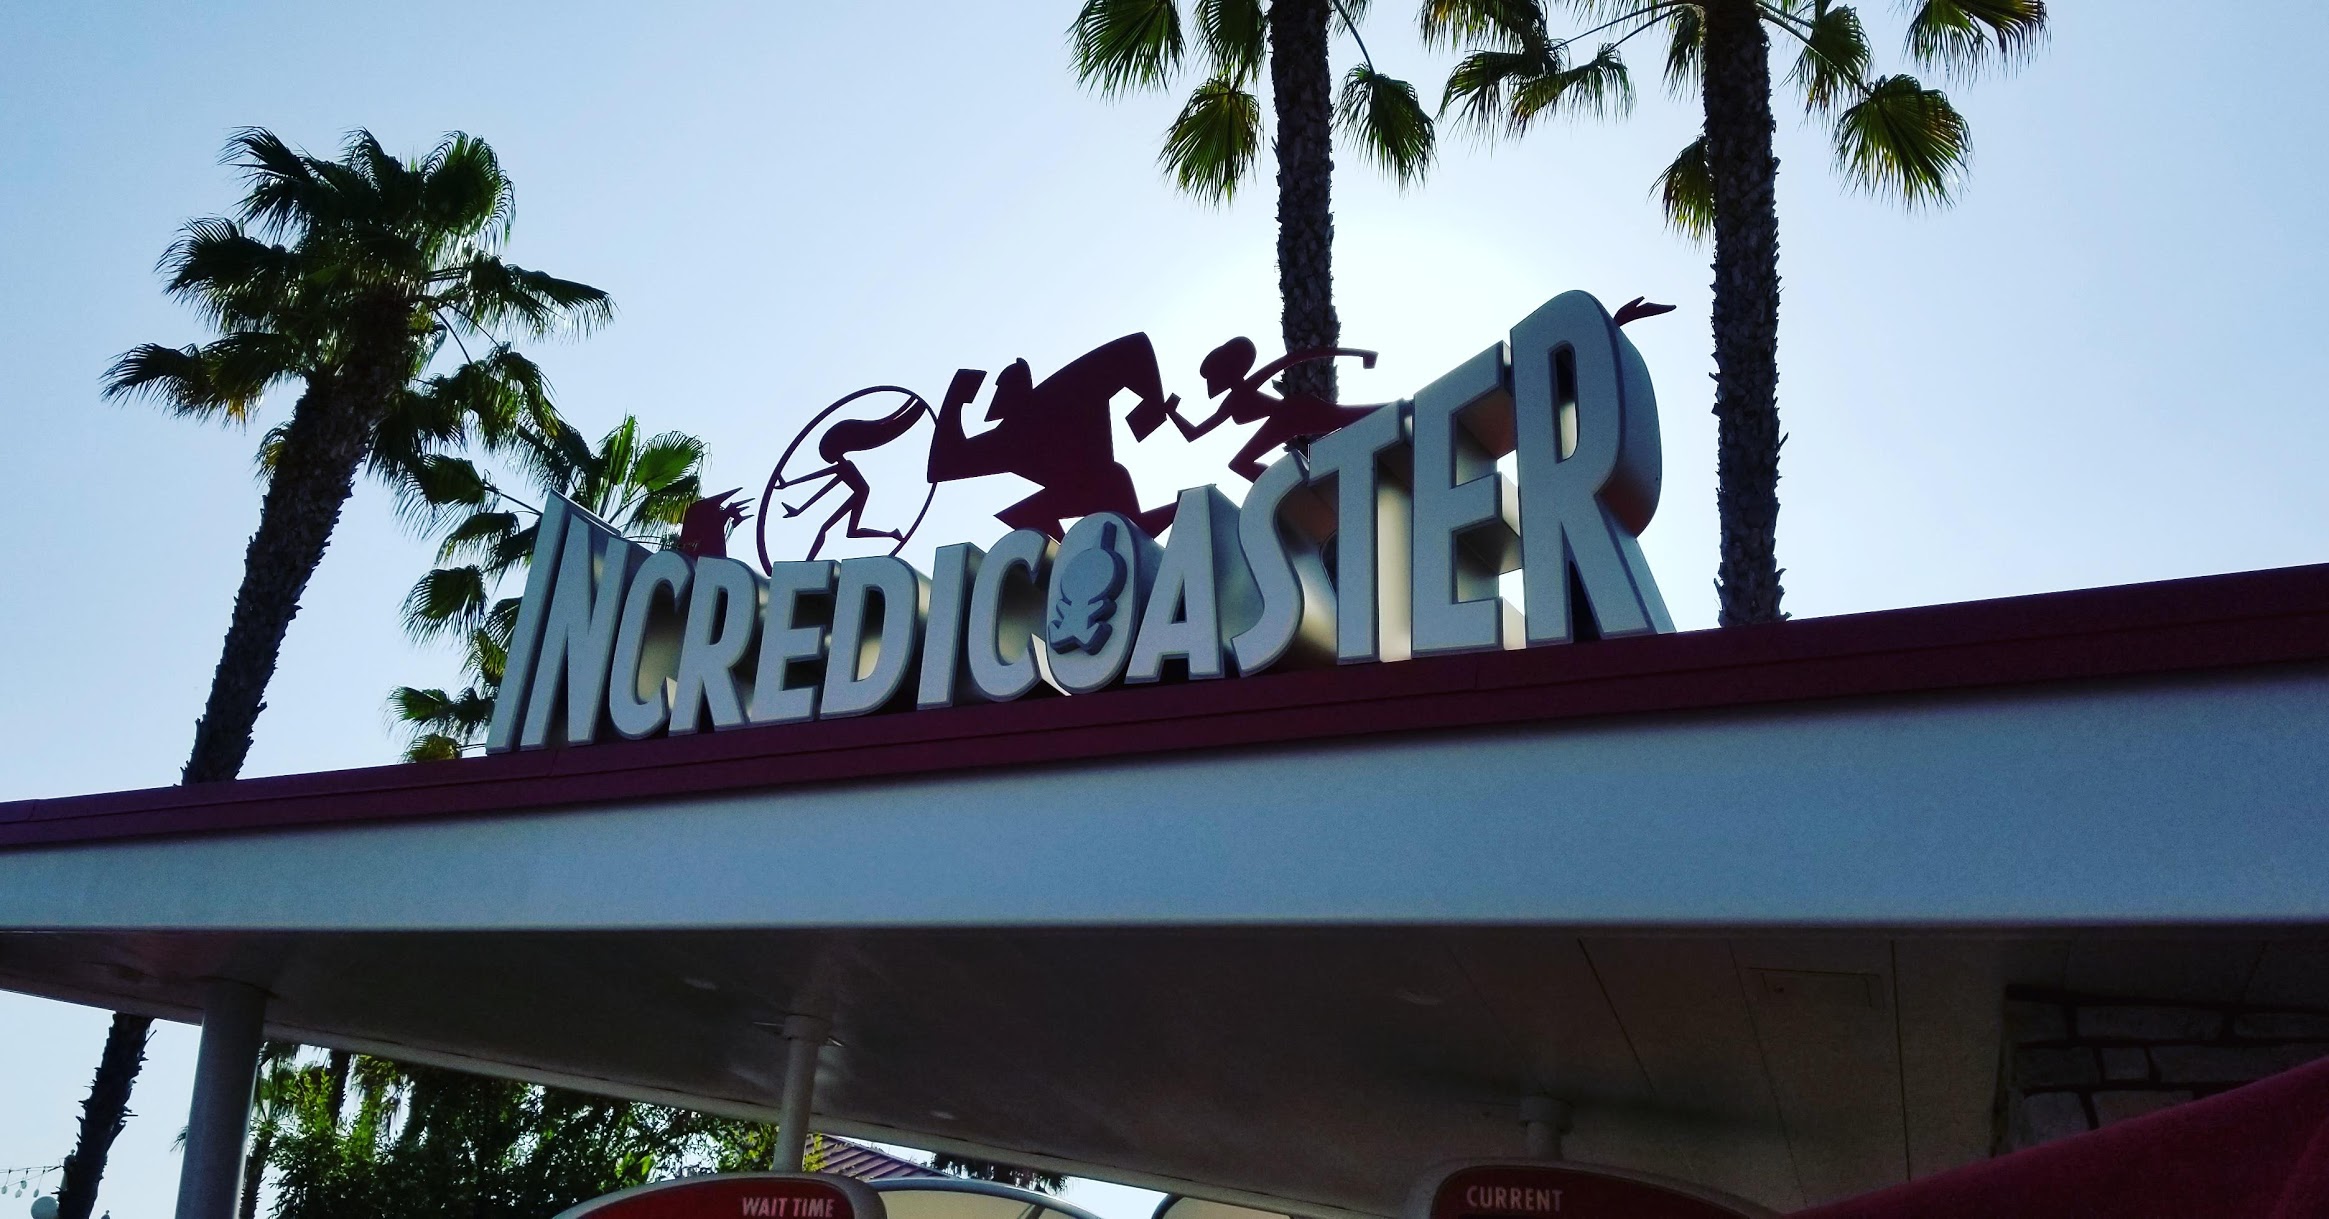 No single rider lines when the Disneyland Resort reopens